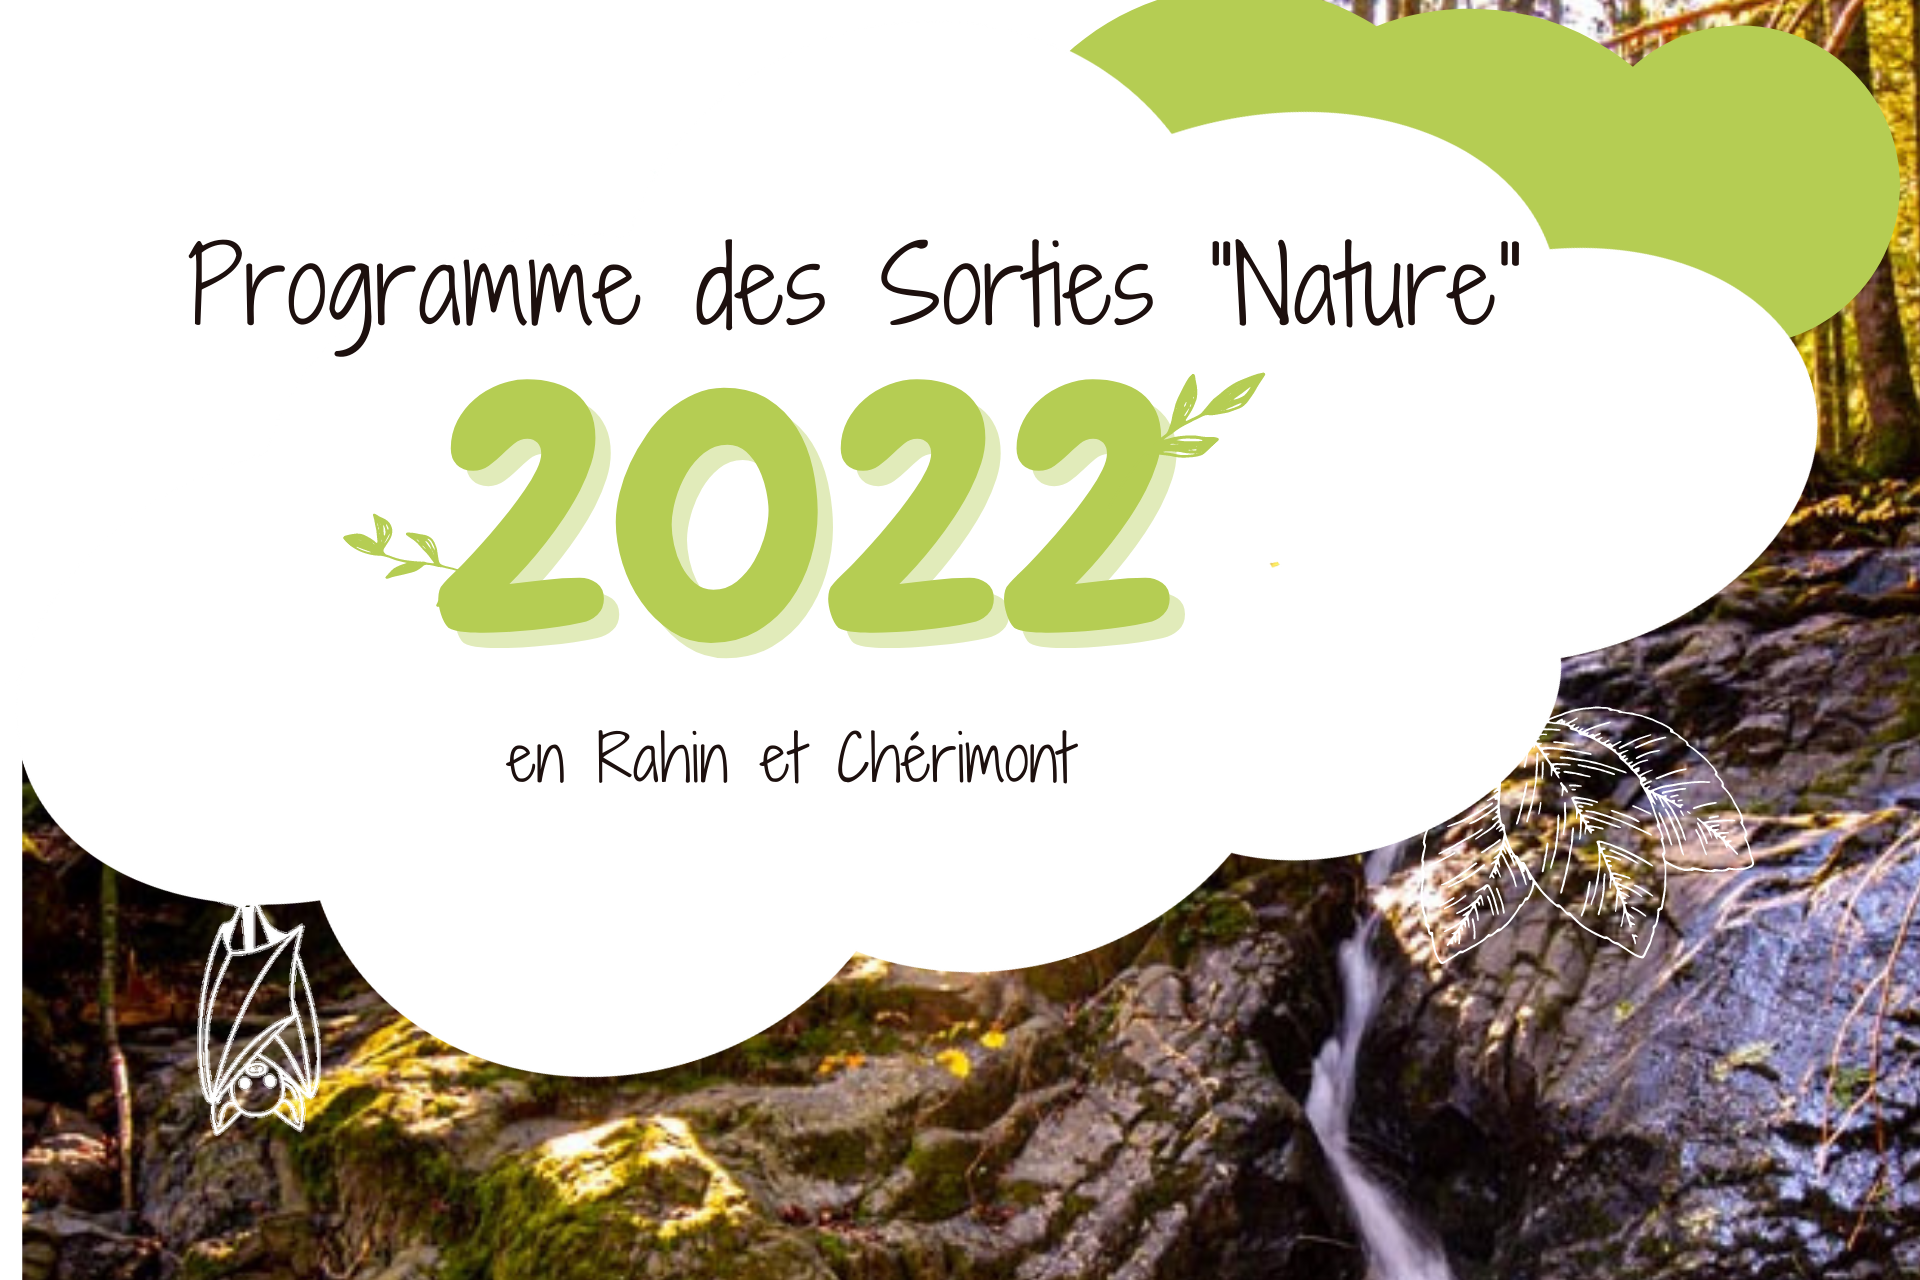 Sorties "Nature" 2022 en Rahin et Chérimont